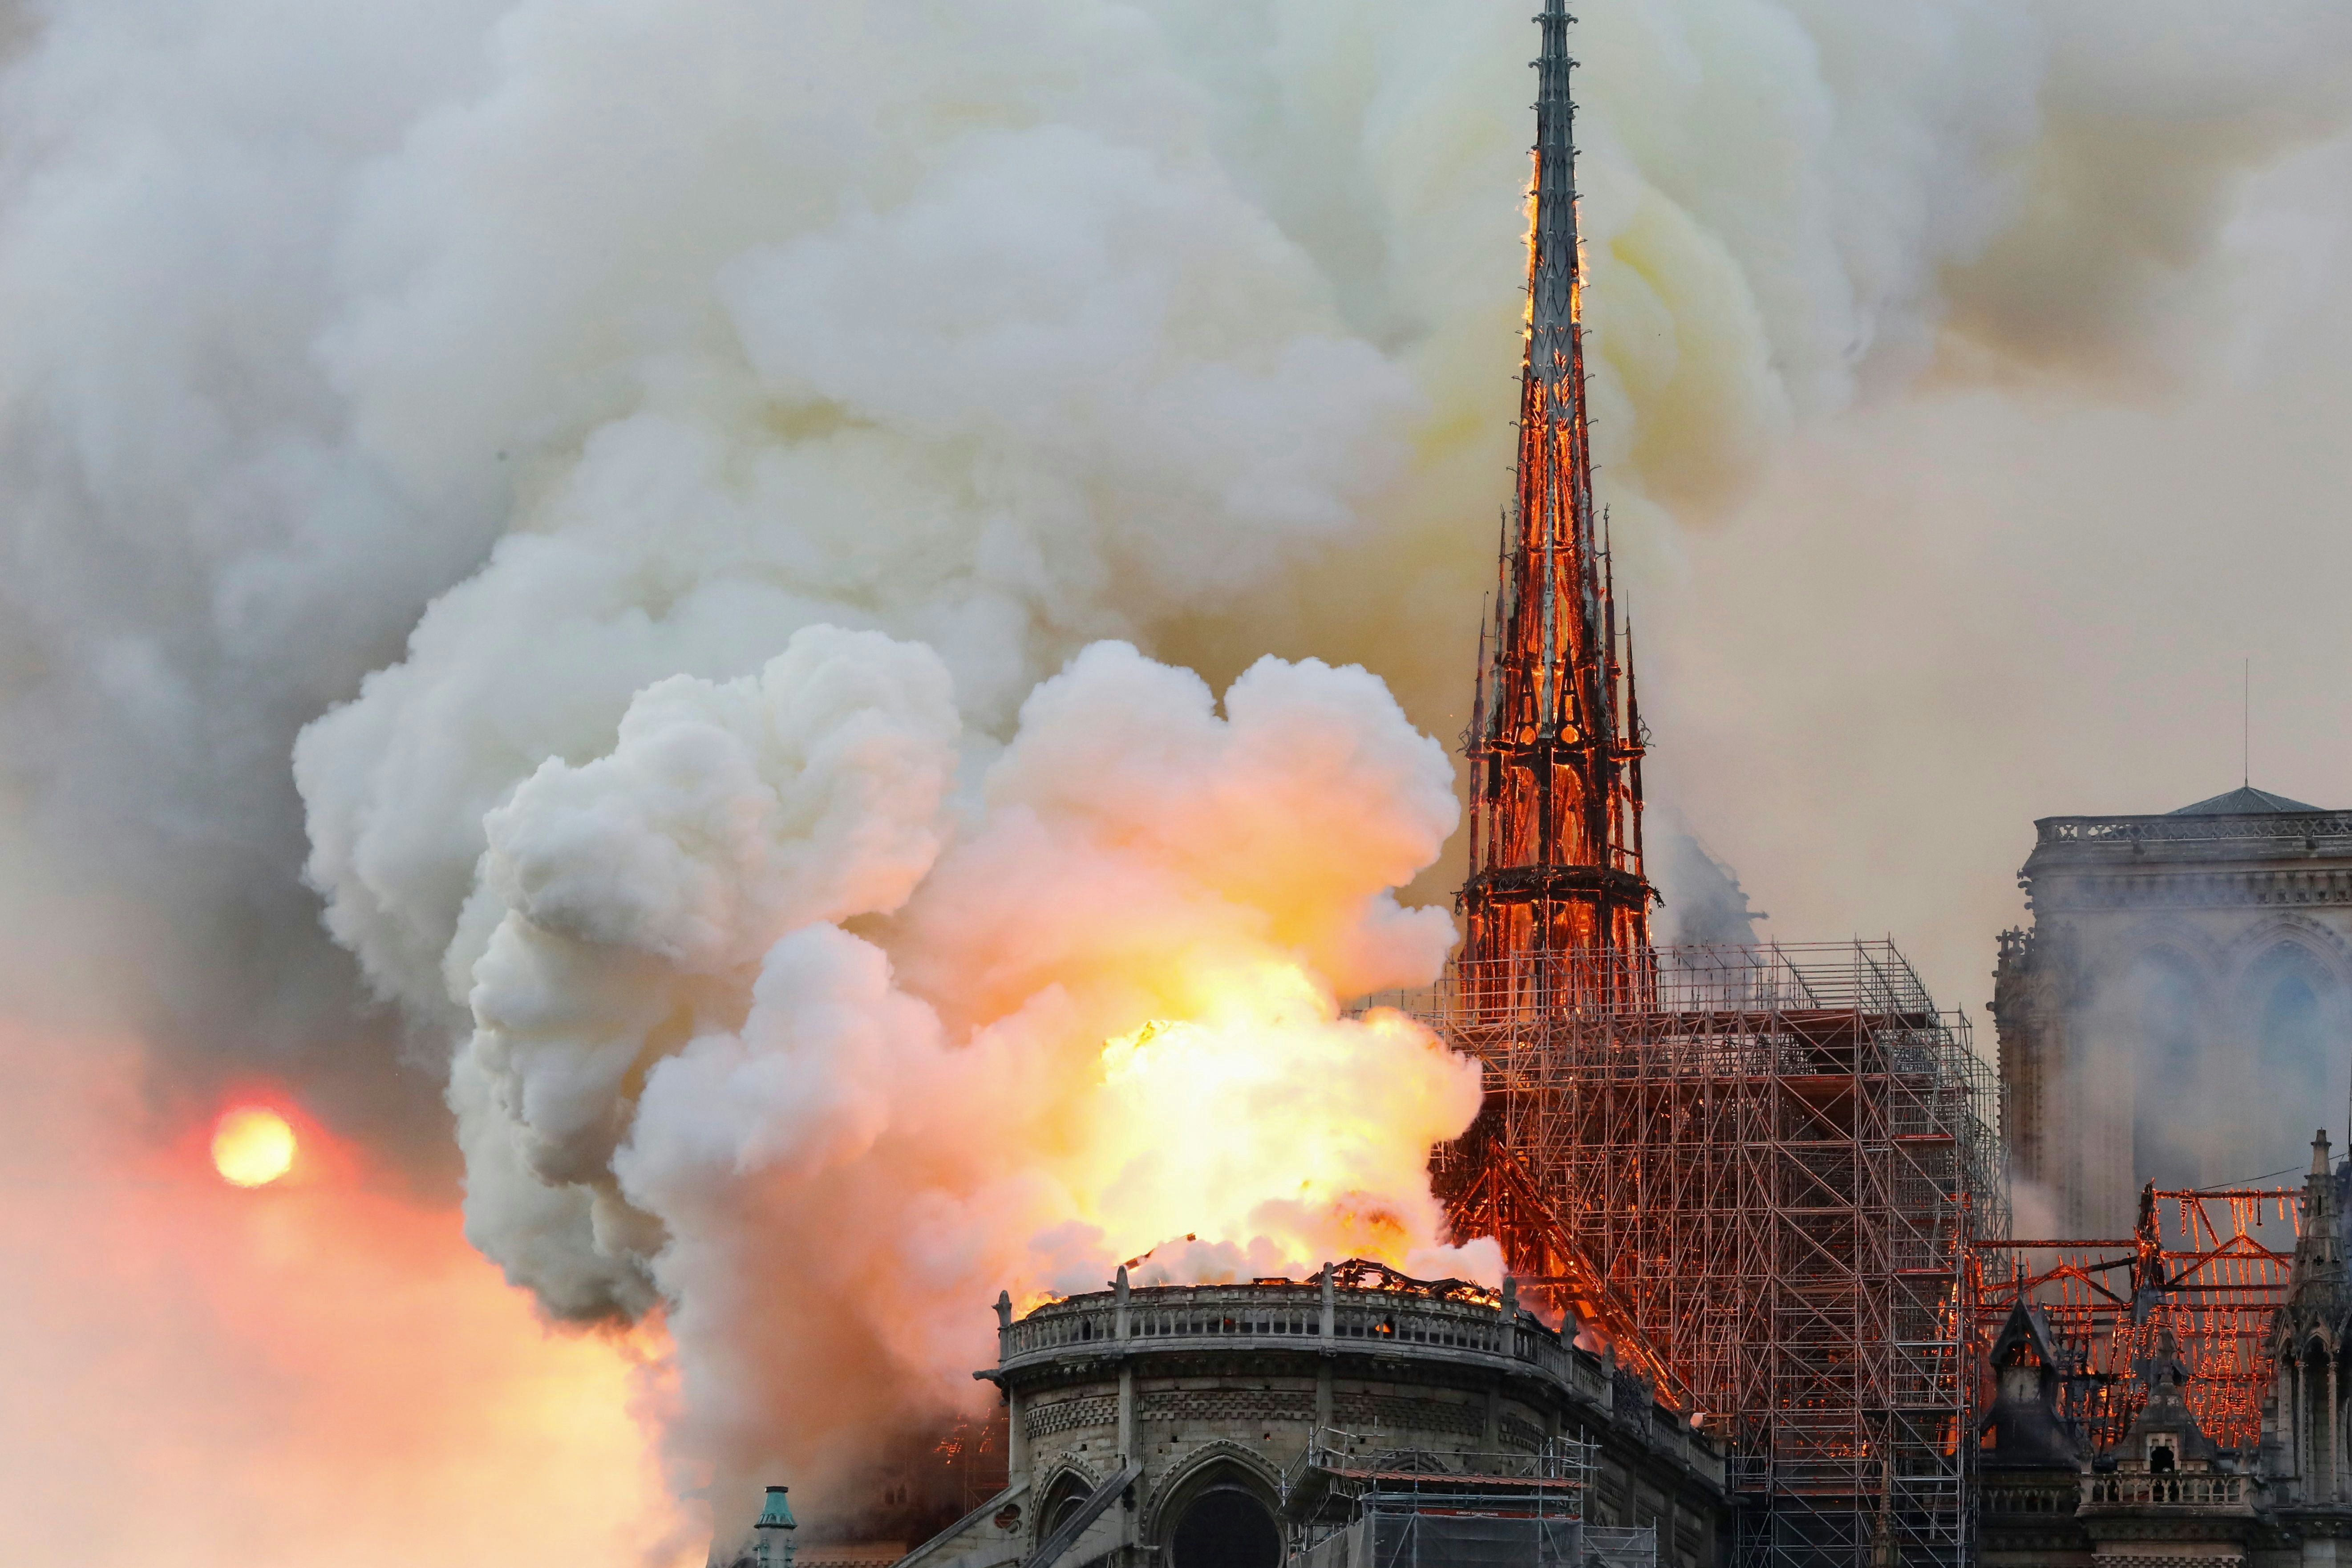 Notre Dame fire.jpg